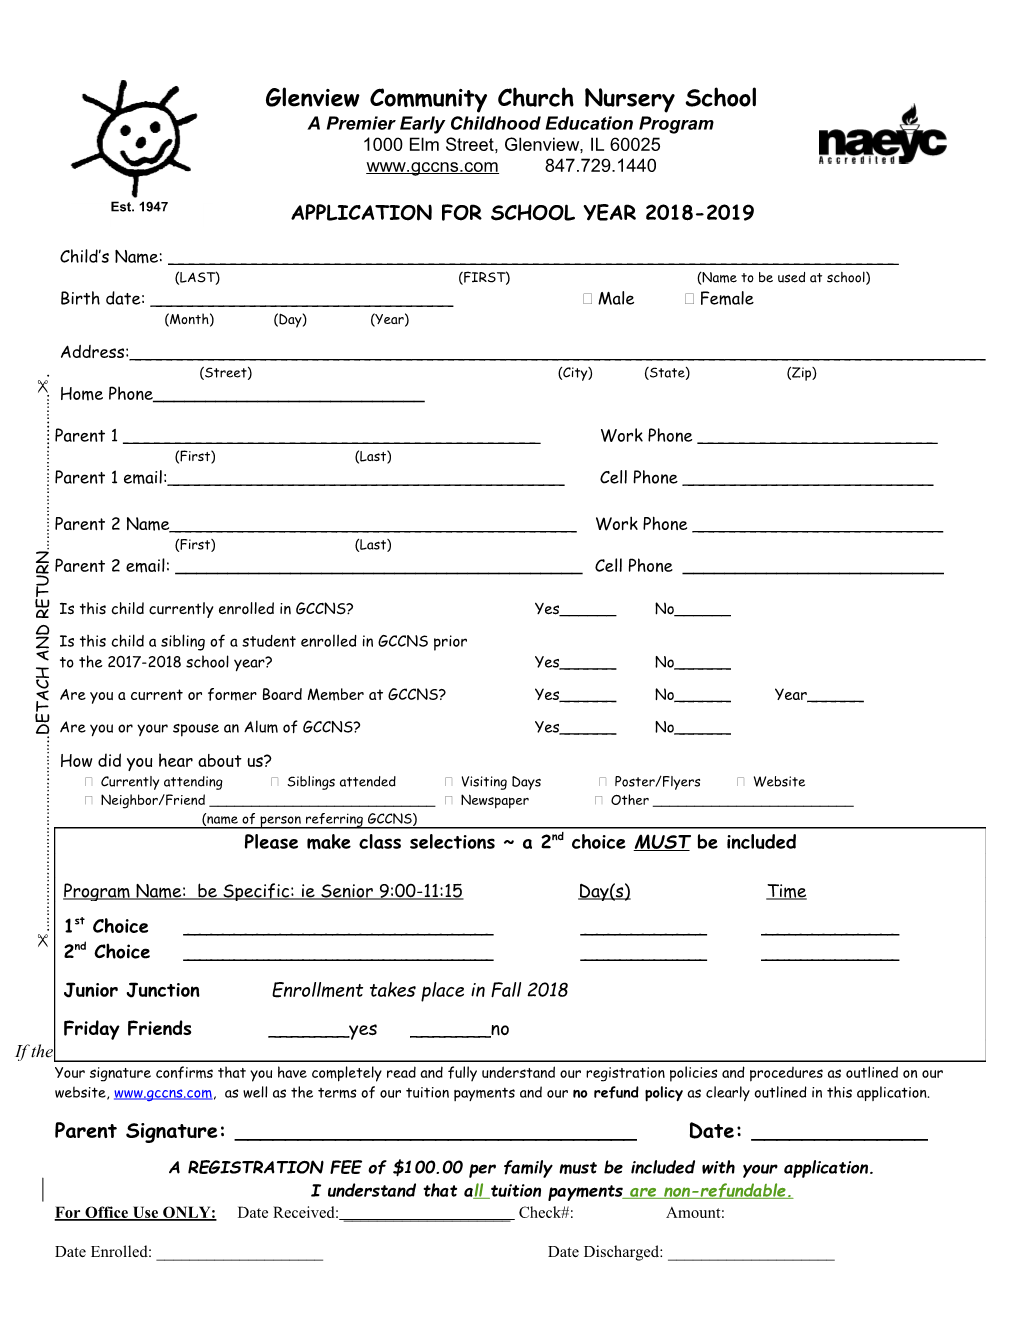 Application for School Year 2018-2019